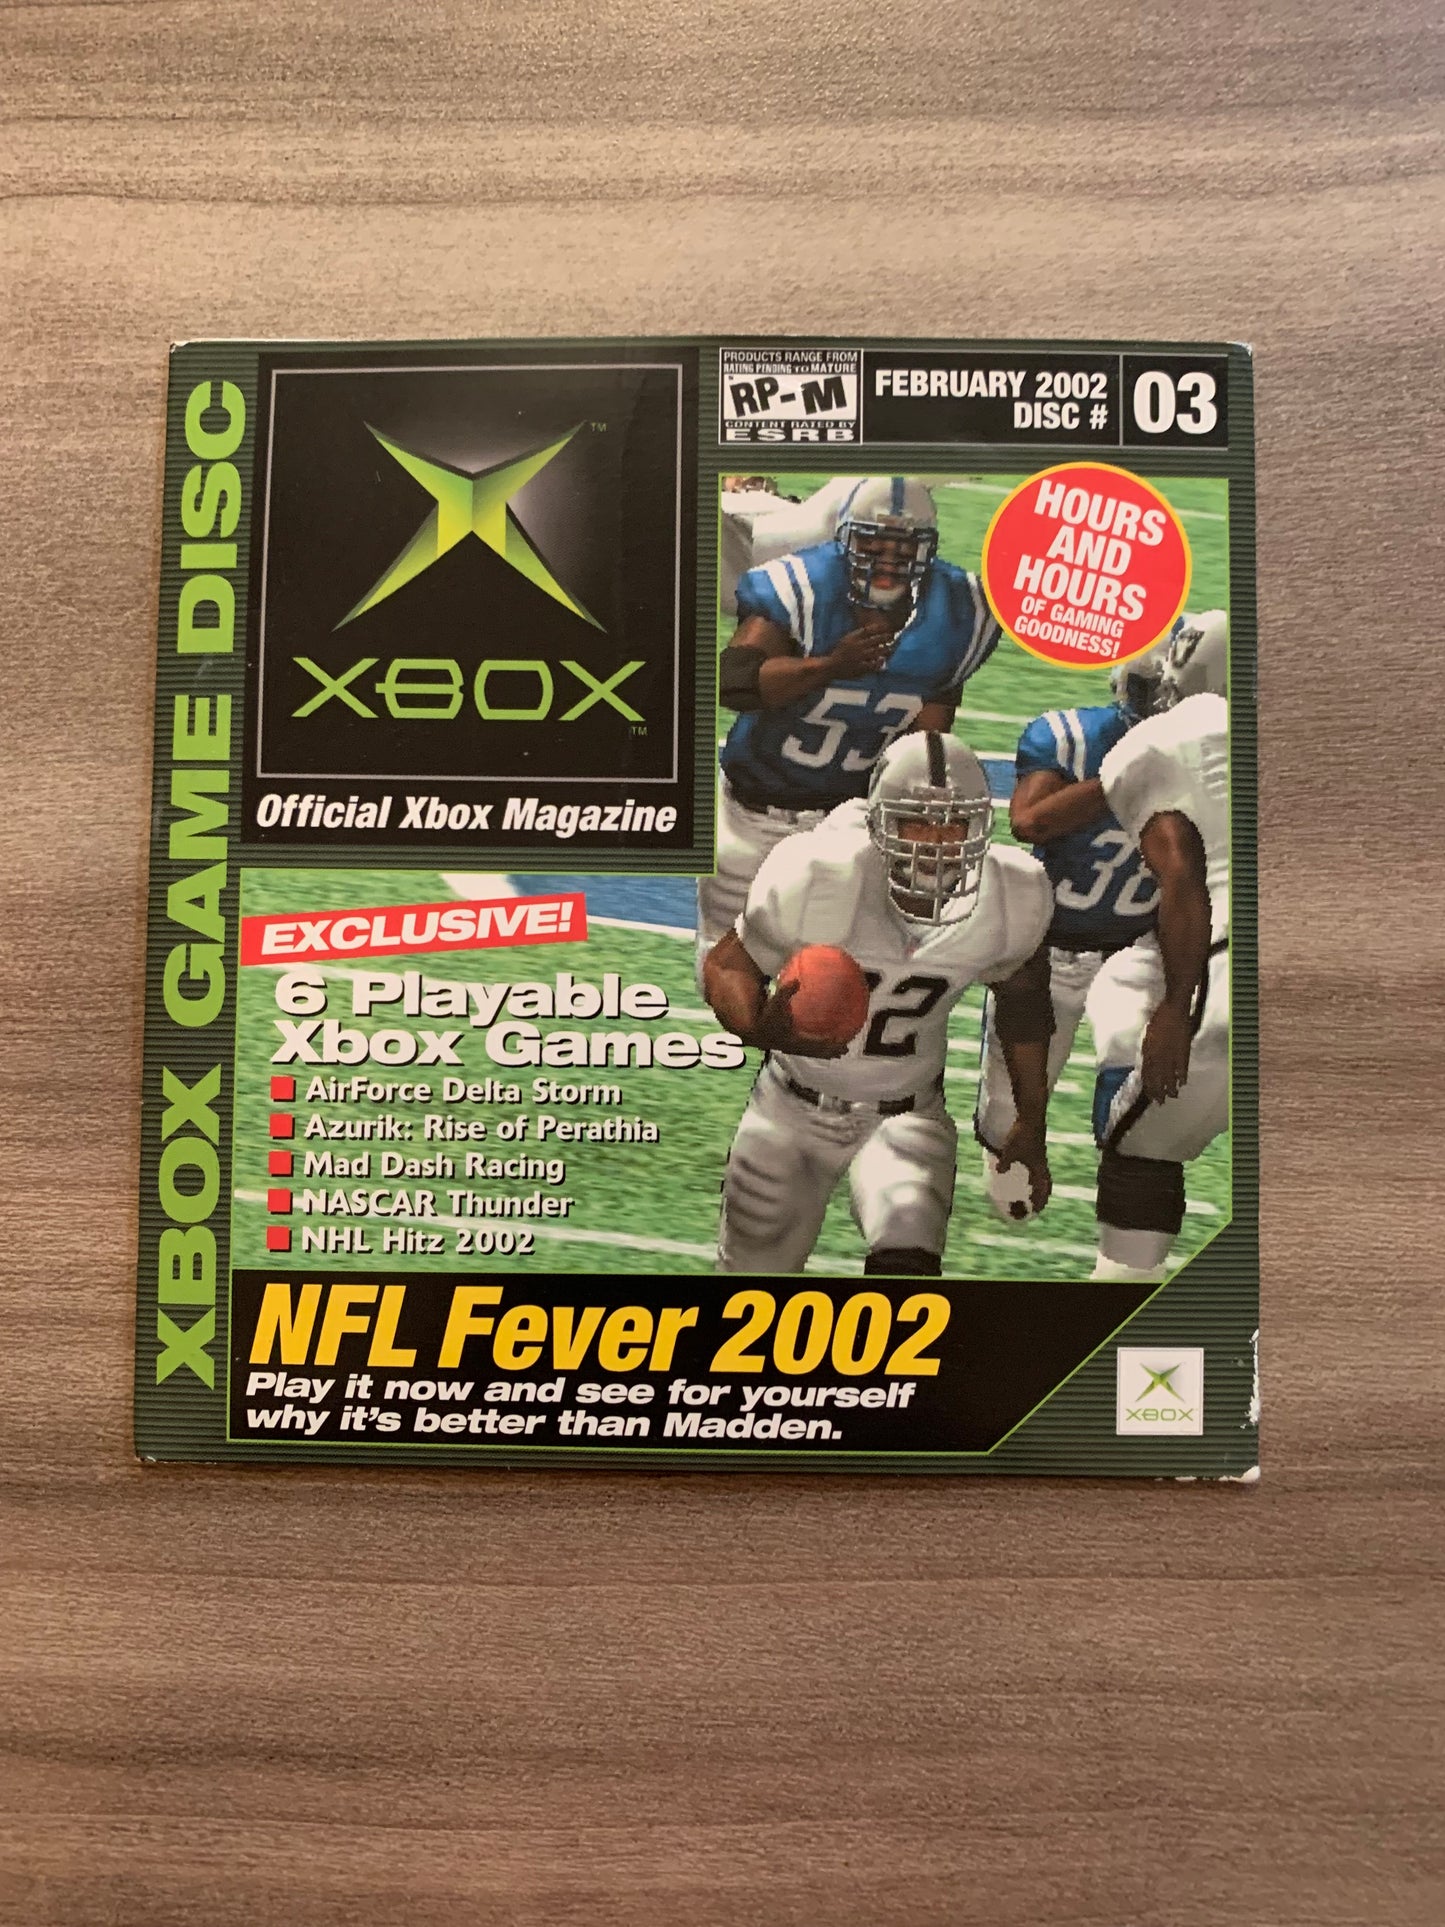 MiCROSOFT XBOX ORiGiNAL | OFFiCiAL XBOX MAGAZiNE DEMO GAME DiSC CD #03 FEBRUARY 2002